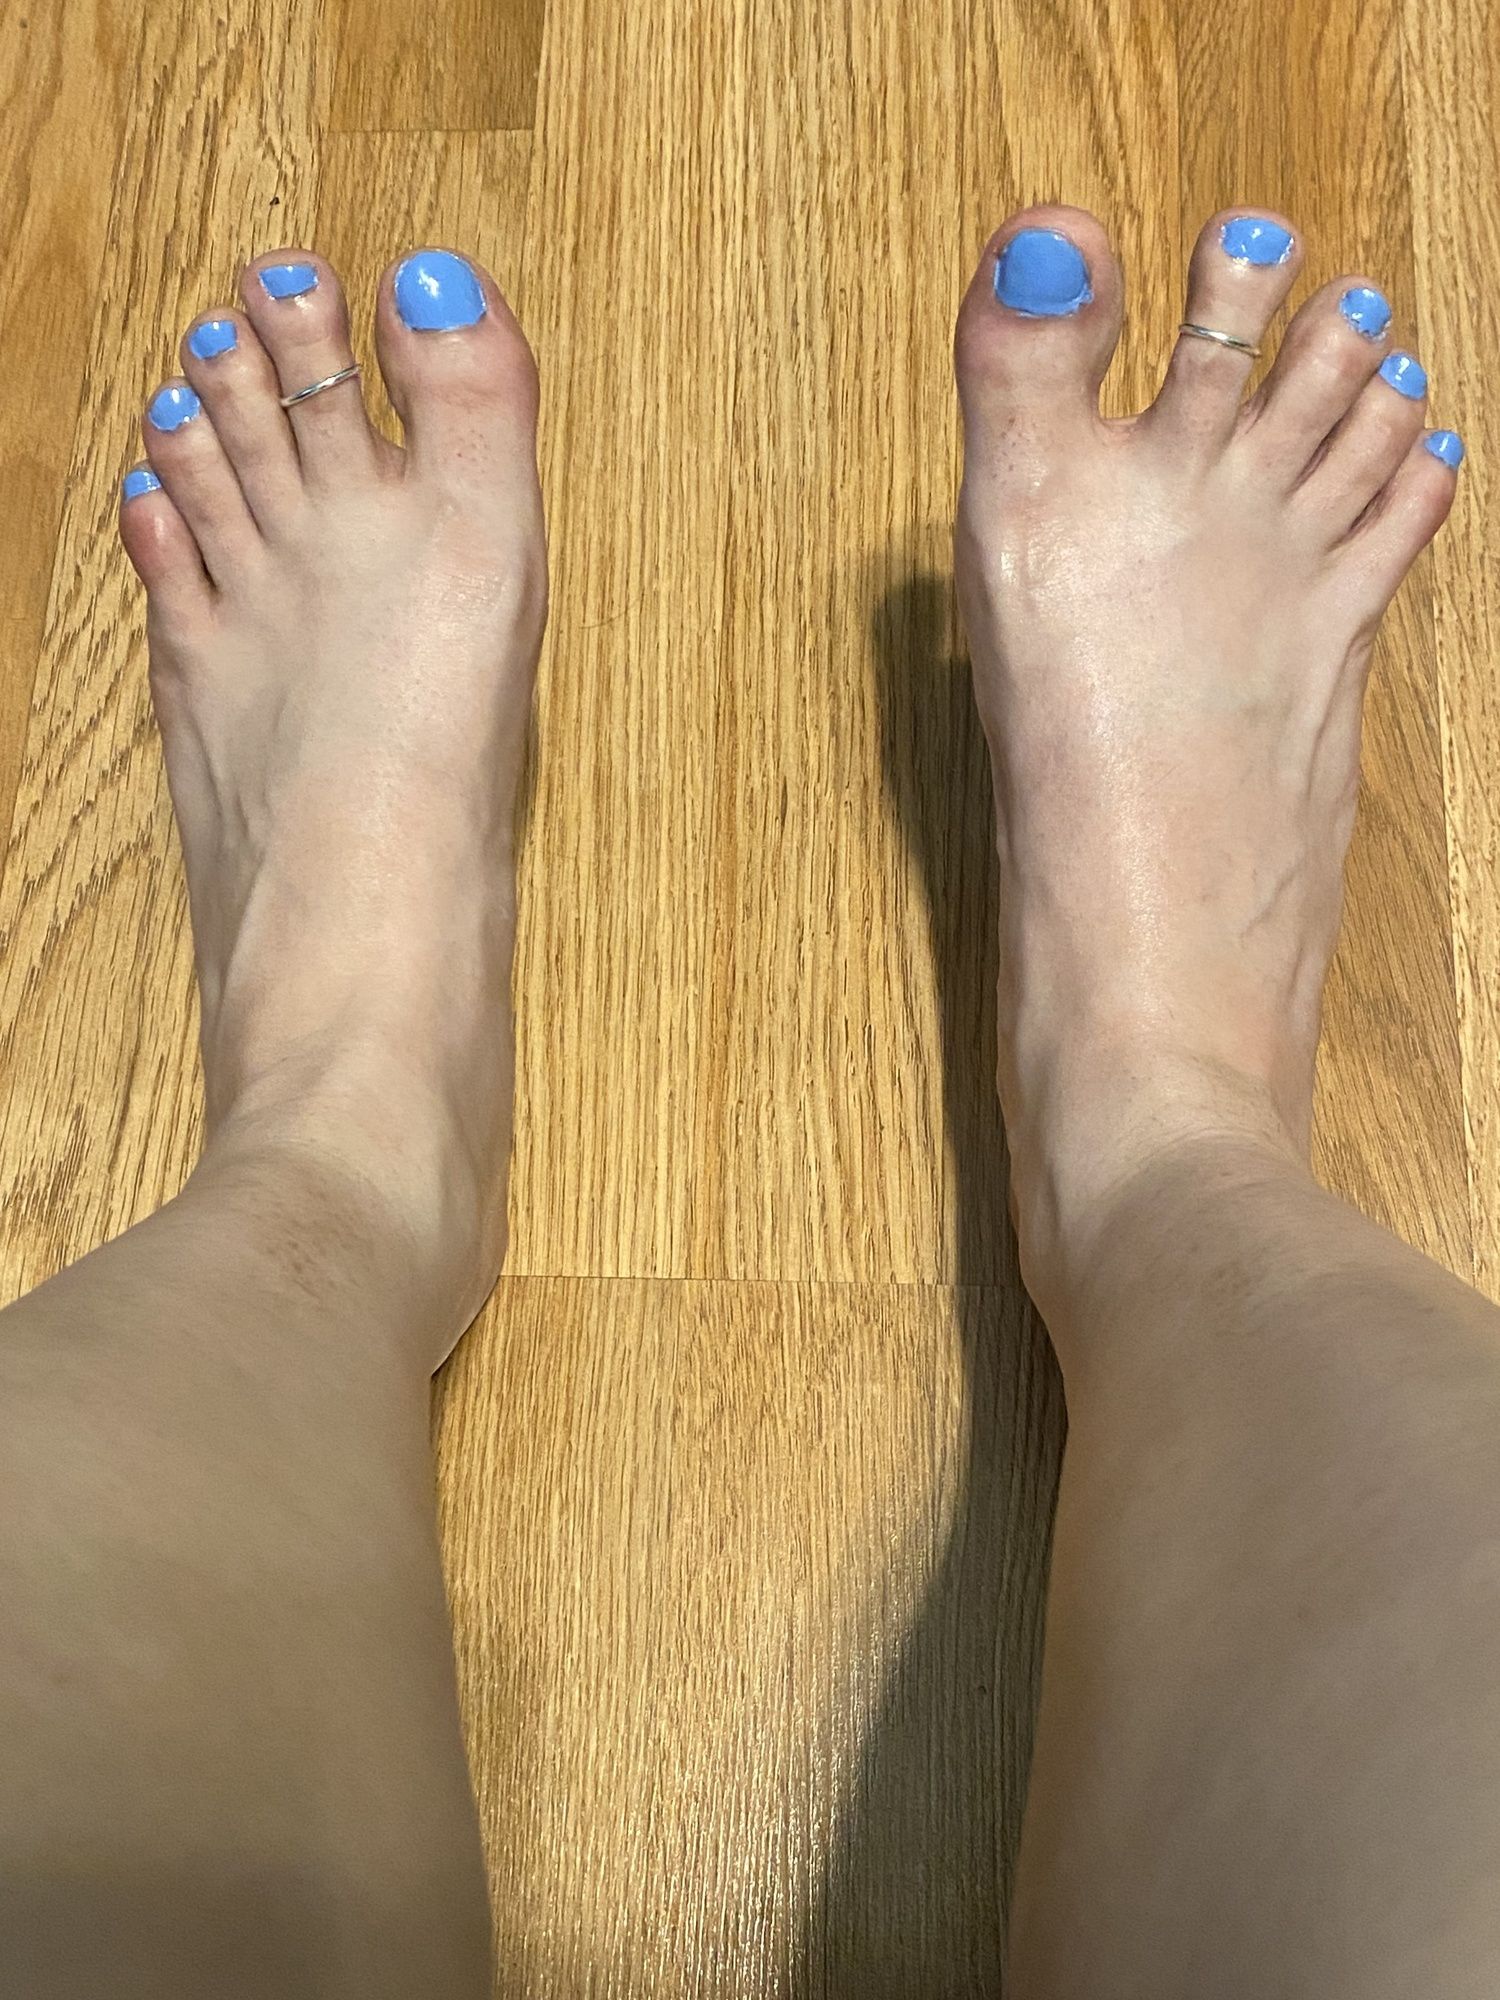 Pretty Feet and Toe Rings #2